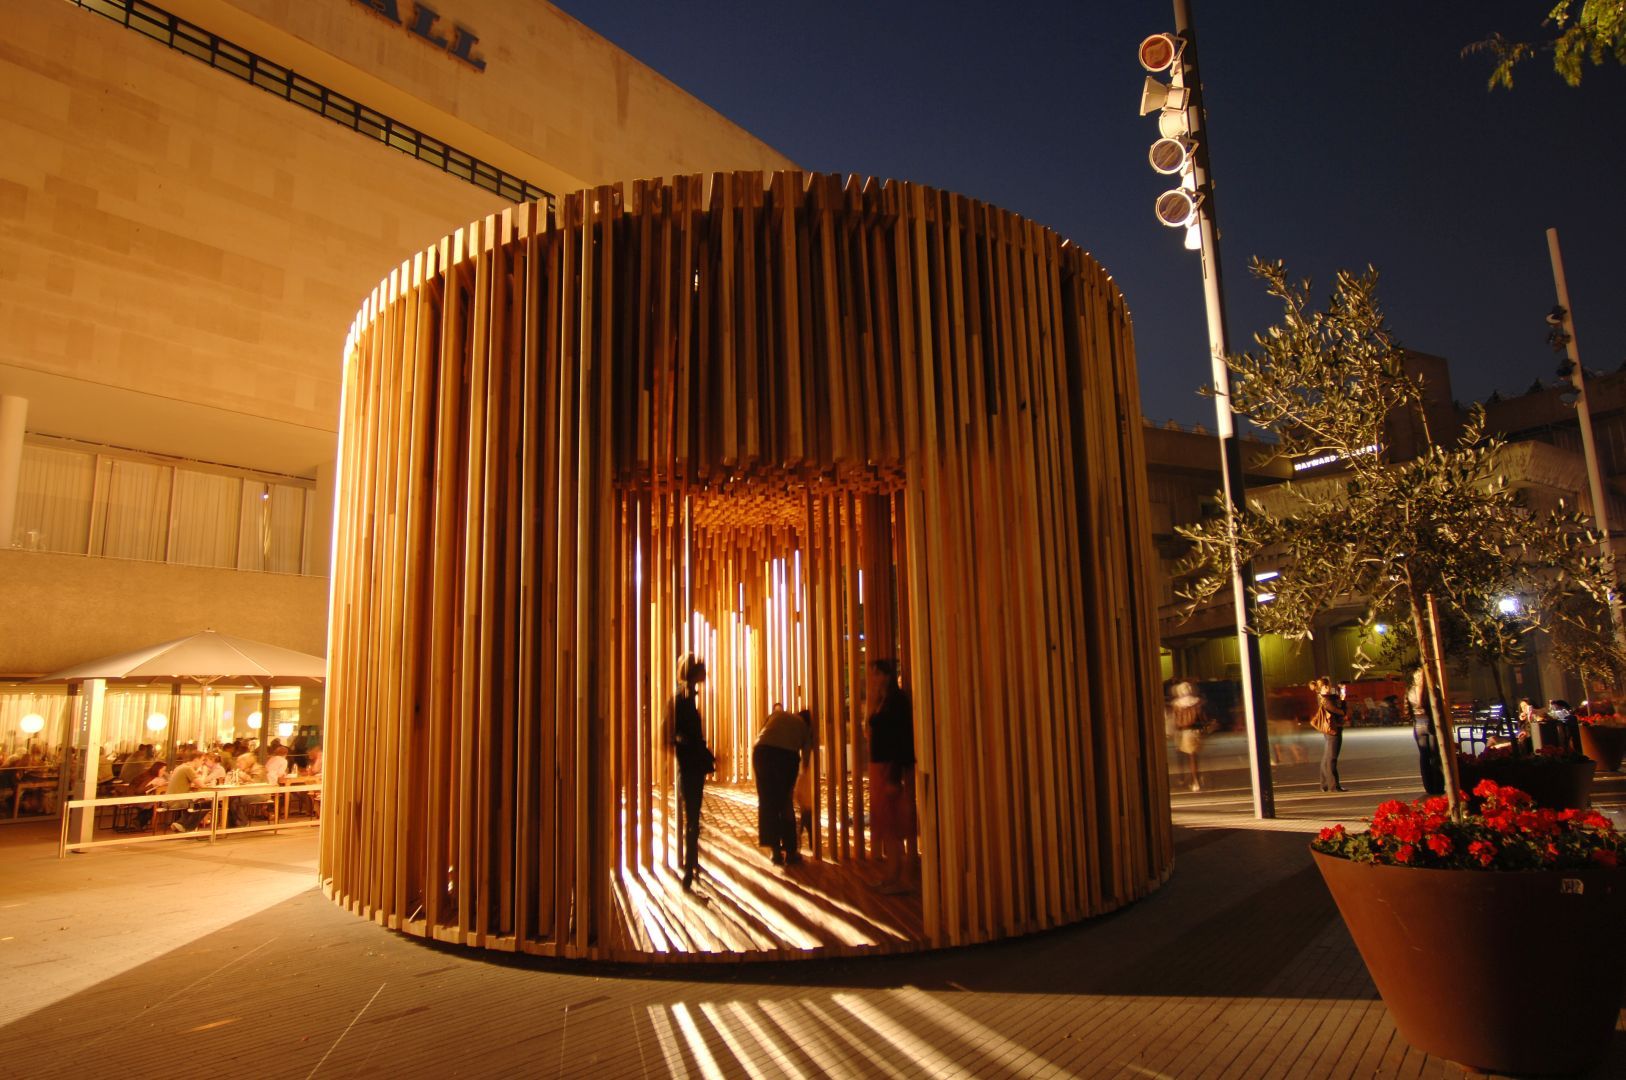 Sclera // The Pavilion made of Tulipwood